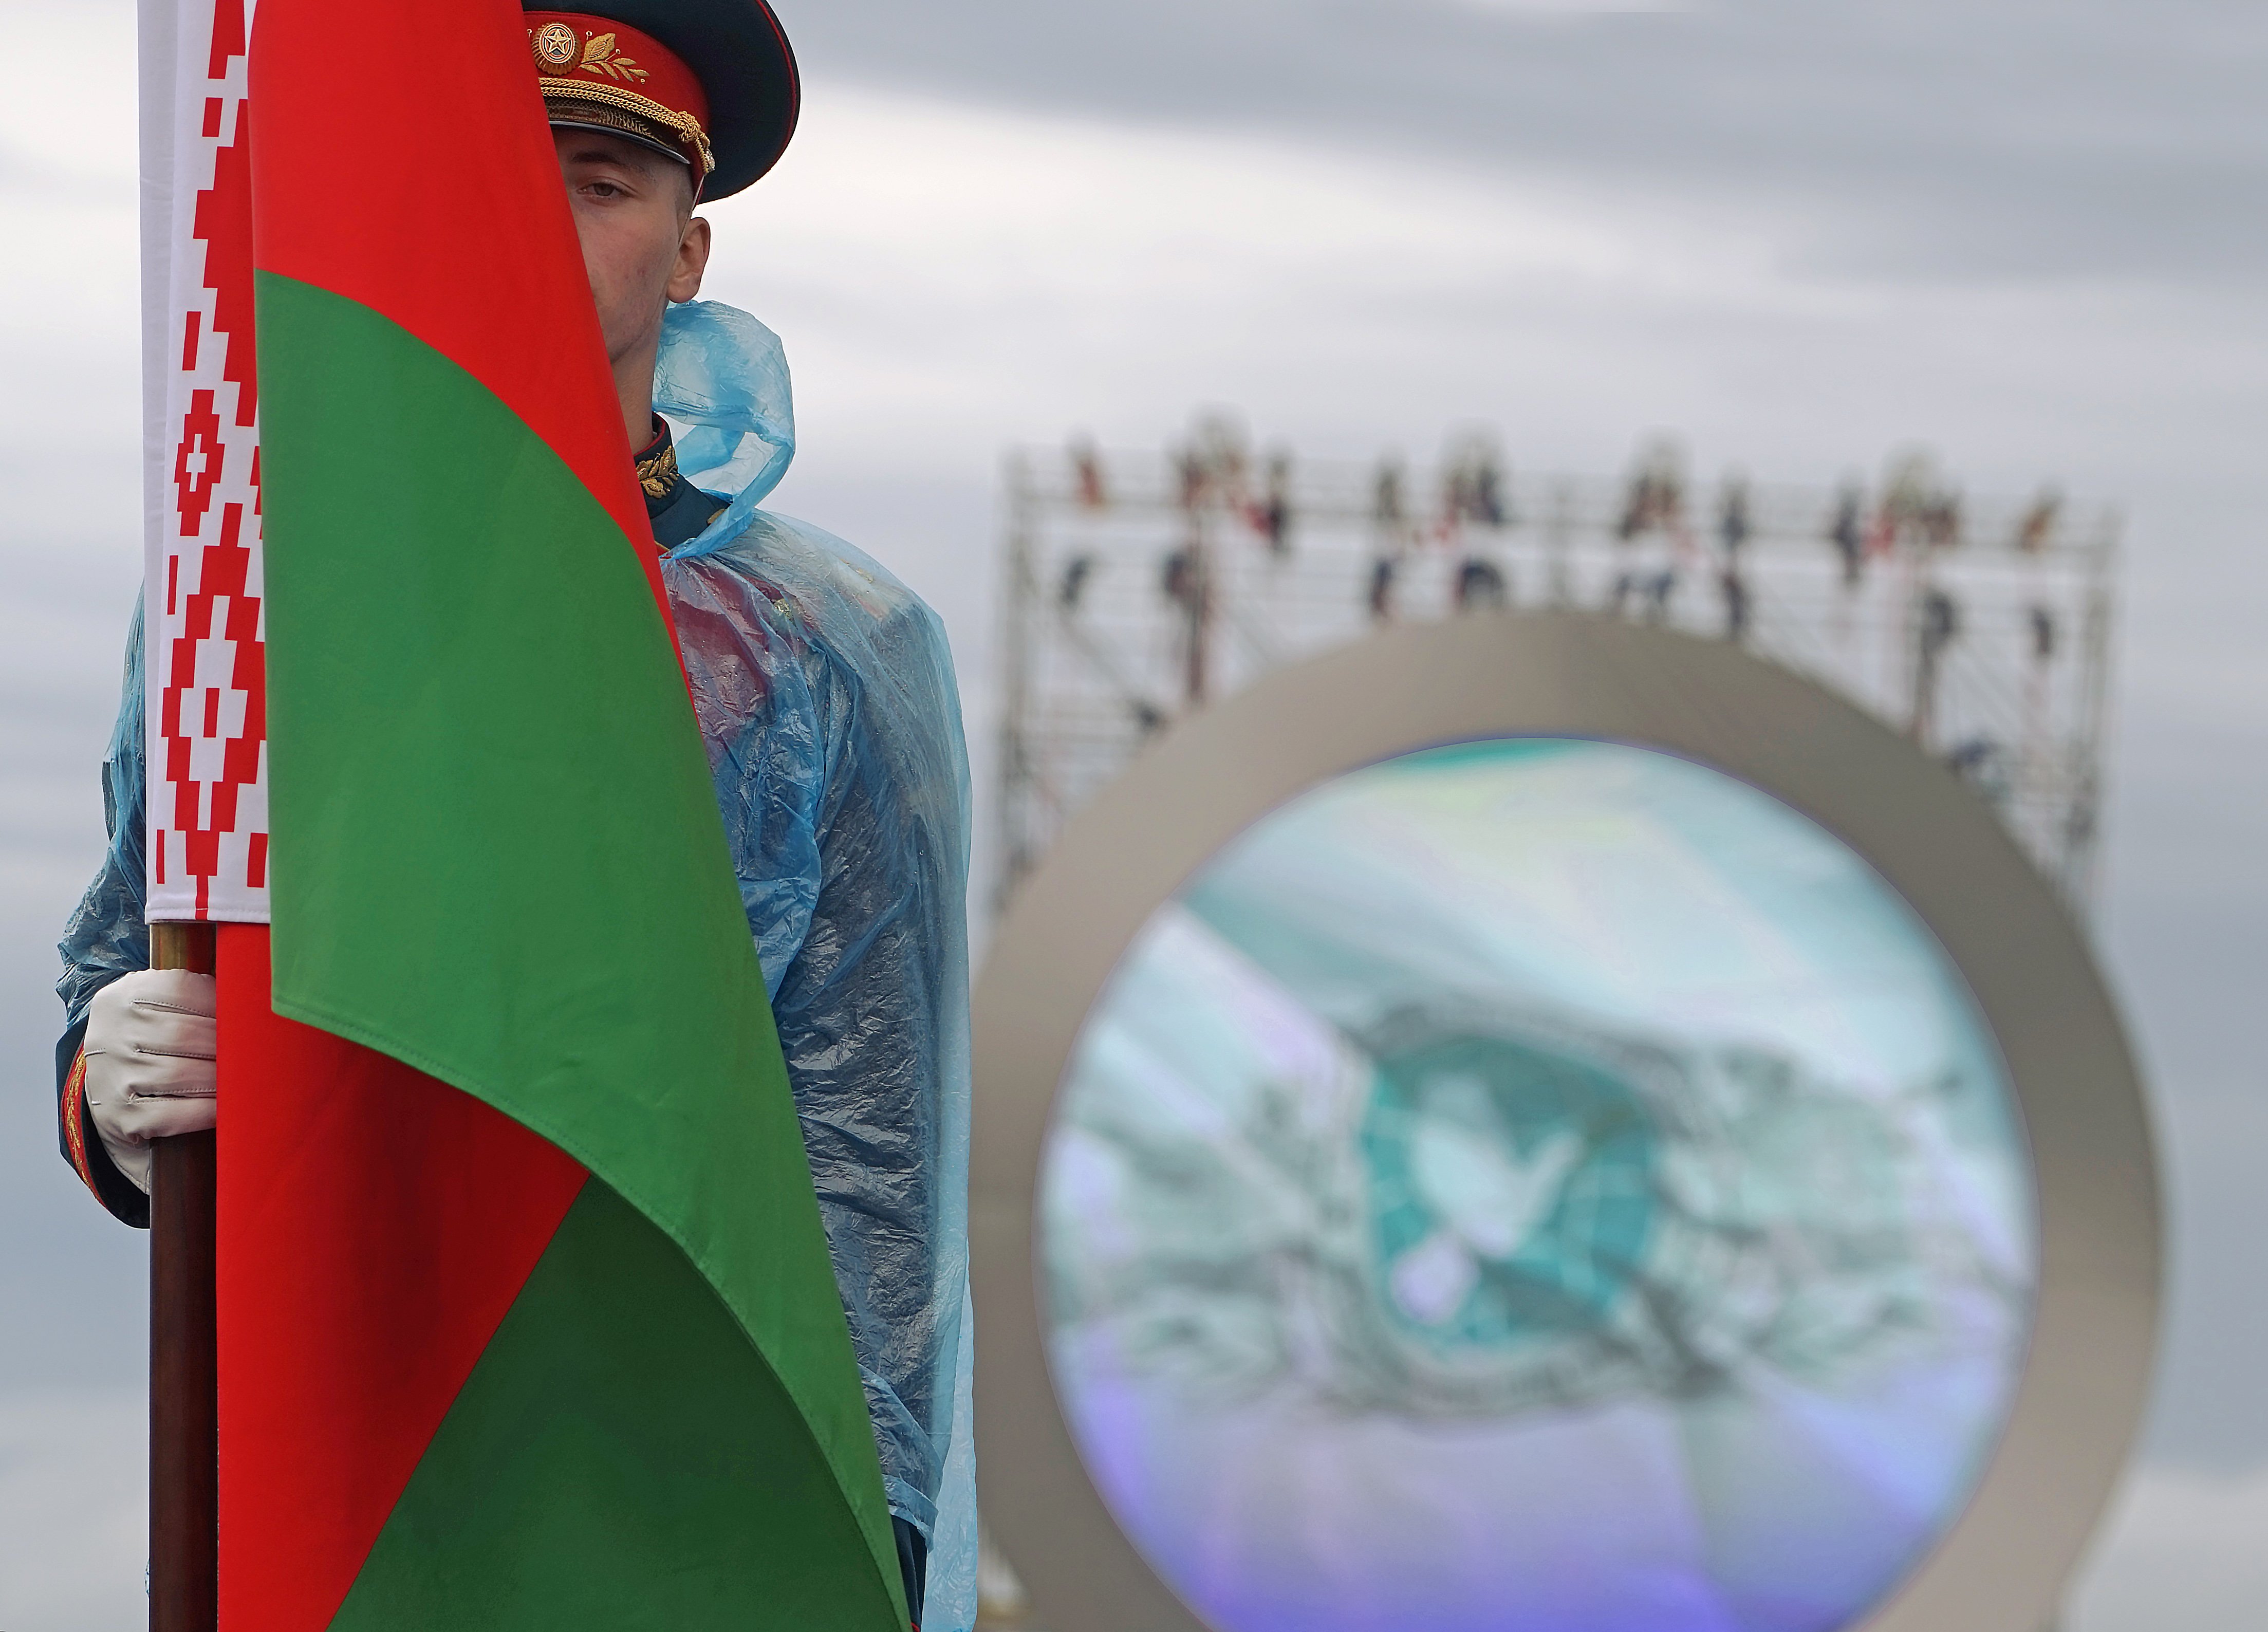 армия, солдат, военная форма, флаг, флаг Беларуси, знамя, Алабино, Мухин Алексей